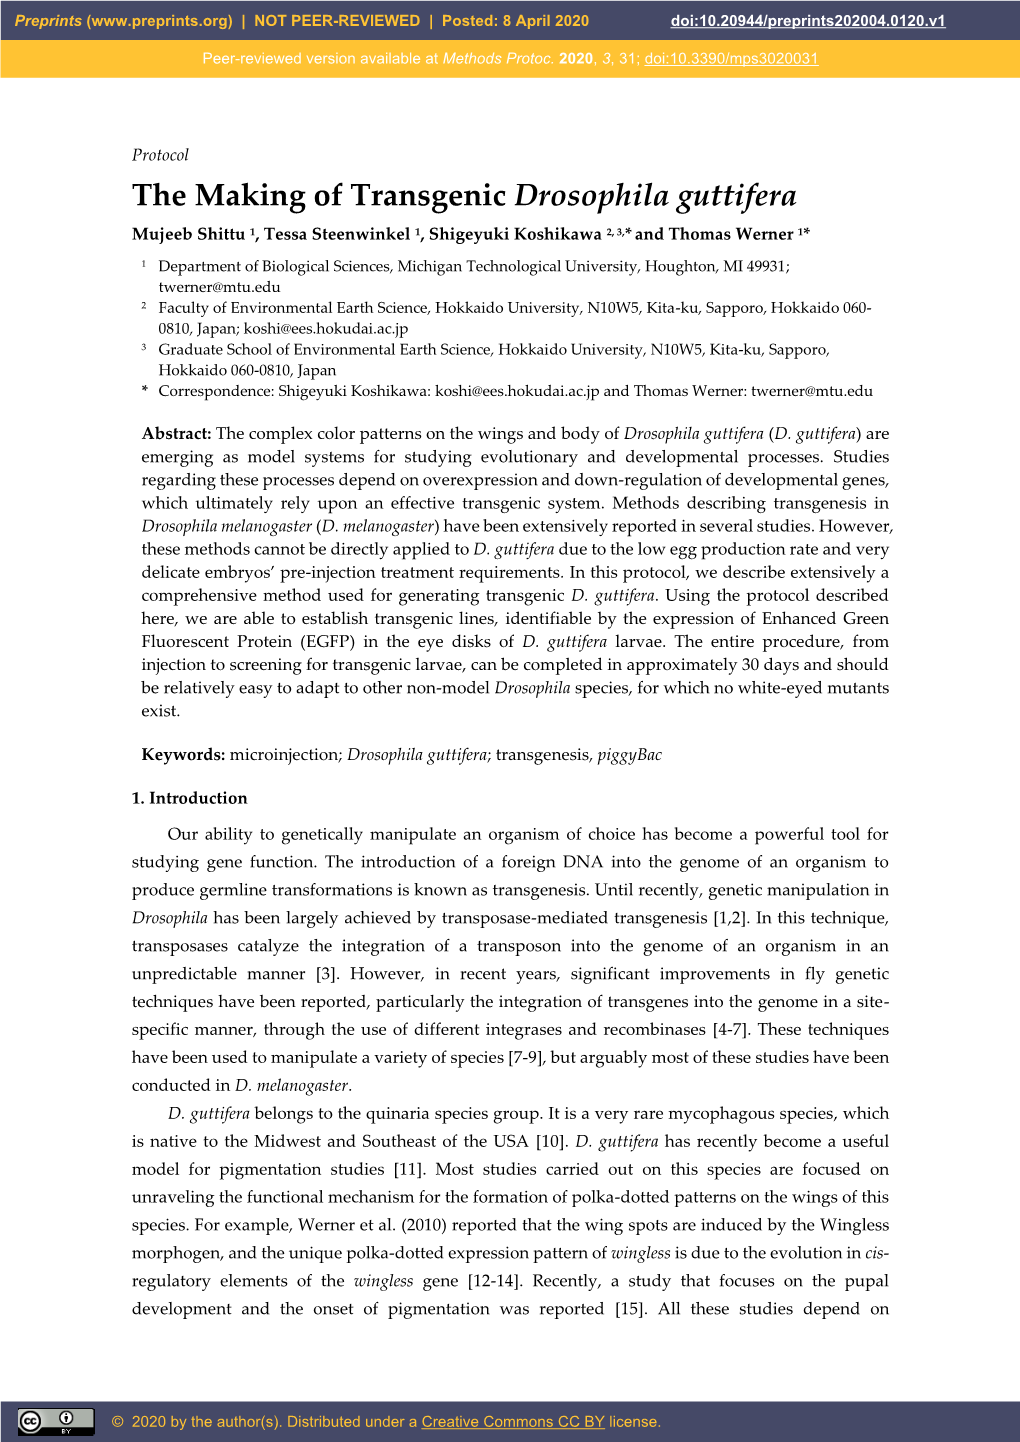 The Making of Transgenic Drosophila Guttifera Mujeeb Shittu 1, Tessa Steenwinkel 1, Shigeyuki Koshikawa 2, 3,* and Thomas Werner 1*